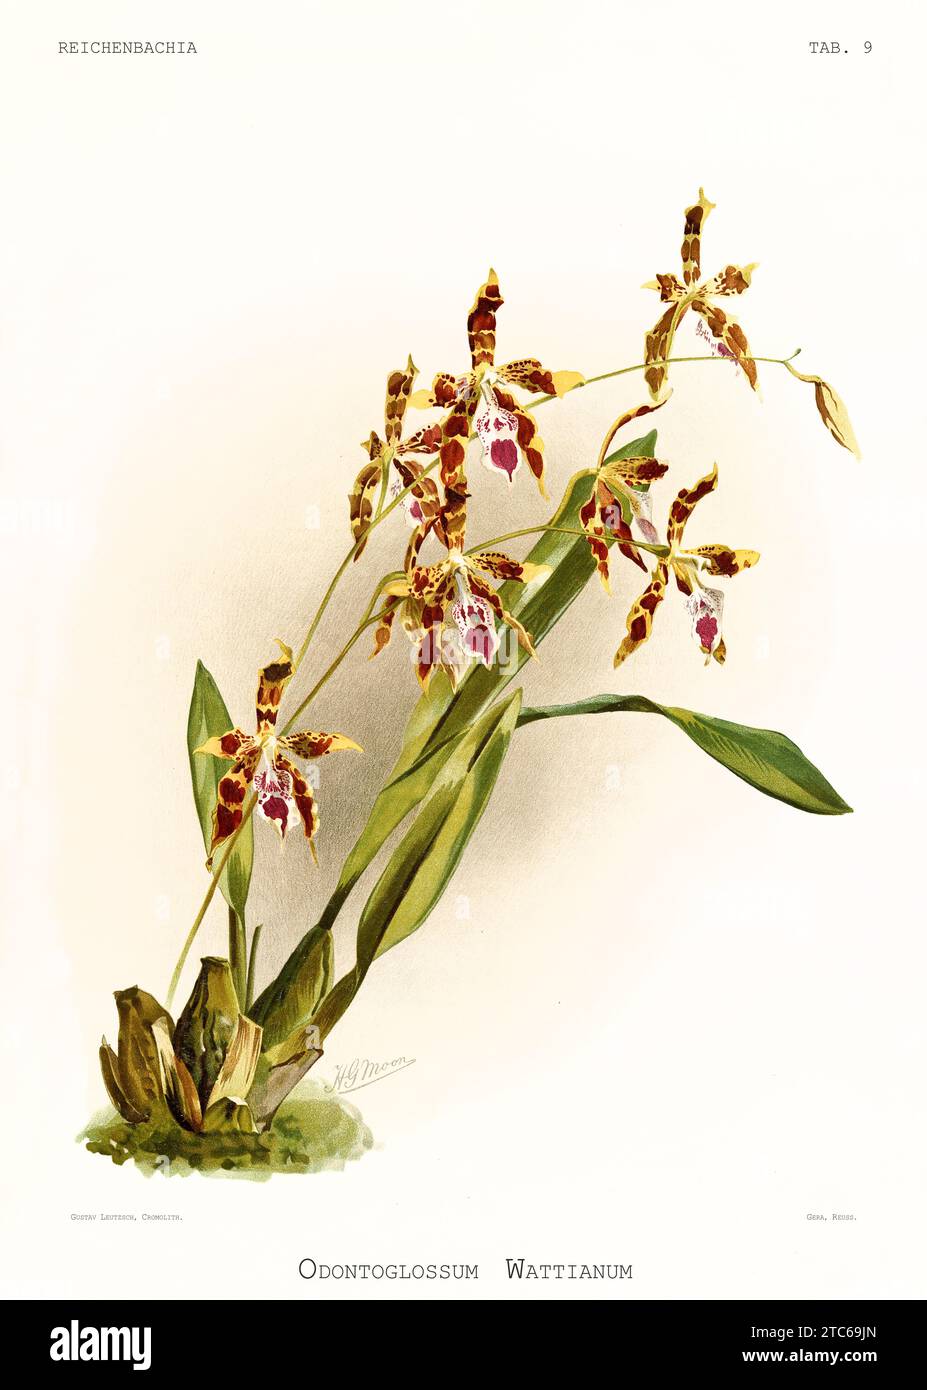 Old illustration of  Wyatt's Odontoglossum (Oncidium wyattianum). Reichenbachia, by F. Sander. St. Albans, UK, 1888 - 1894 Stock Photo